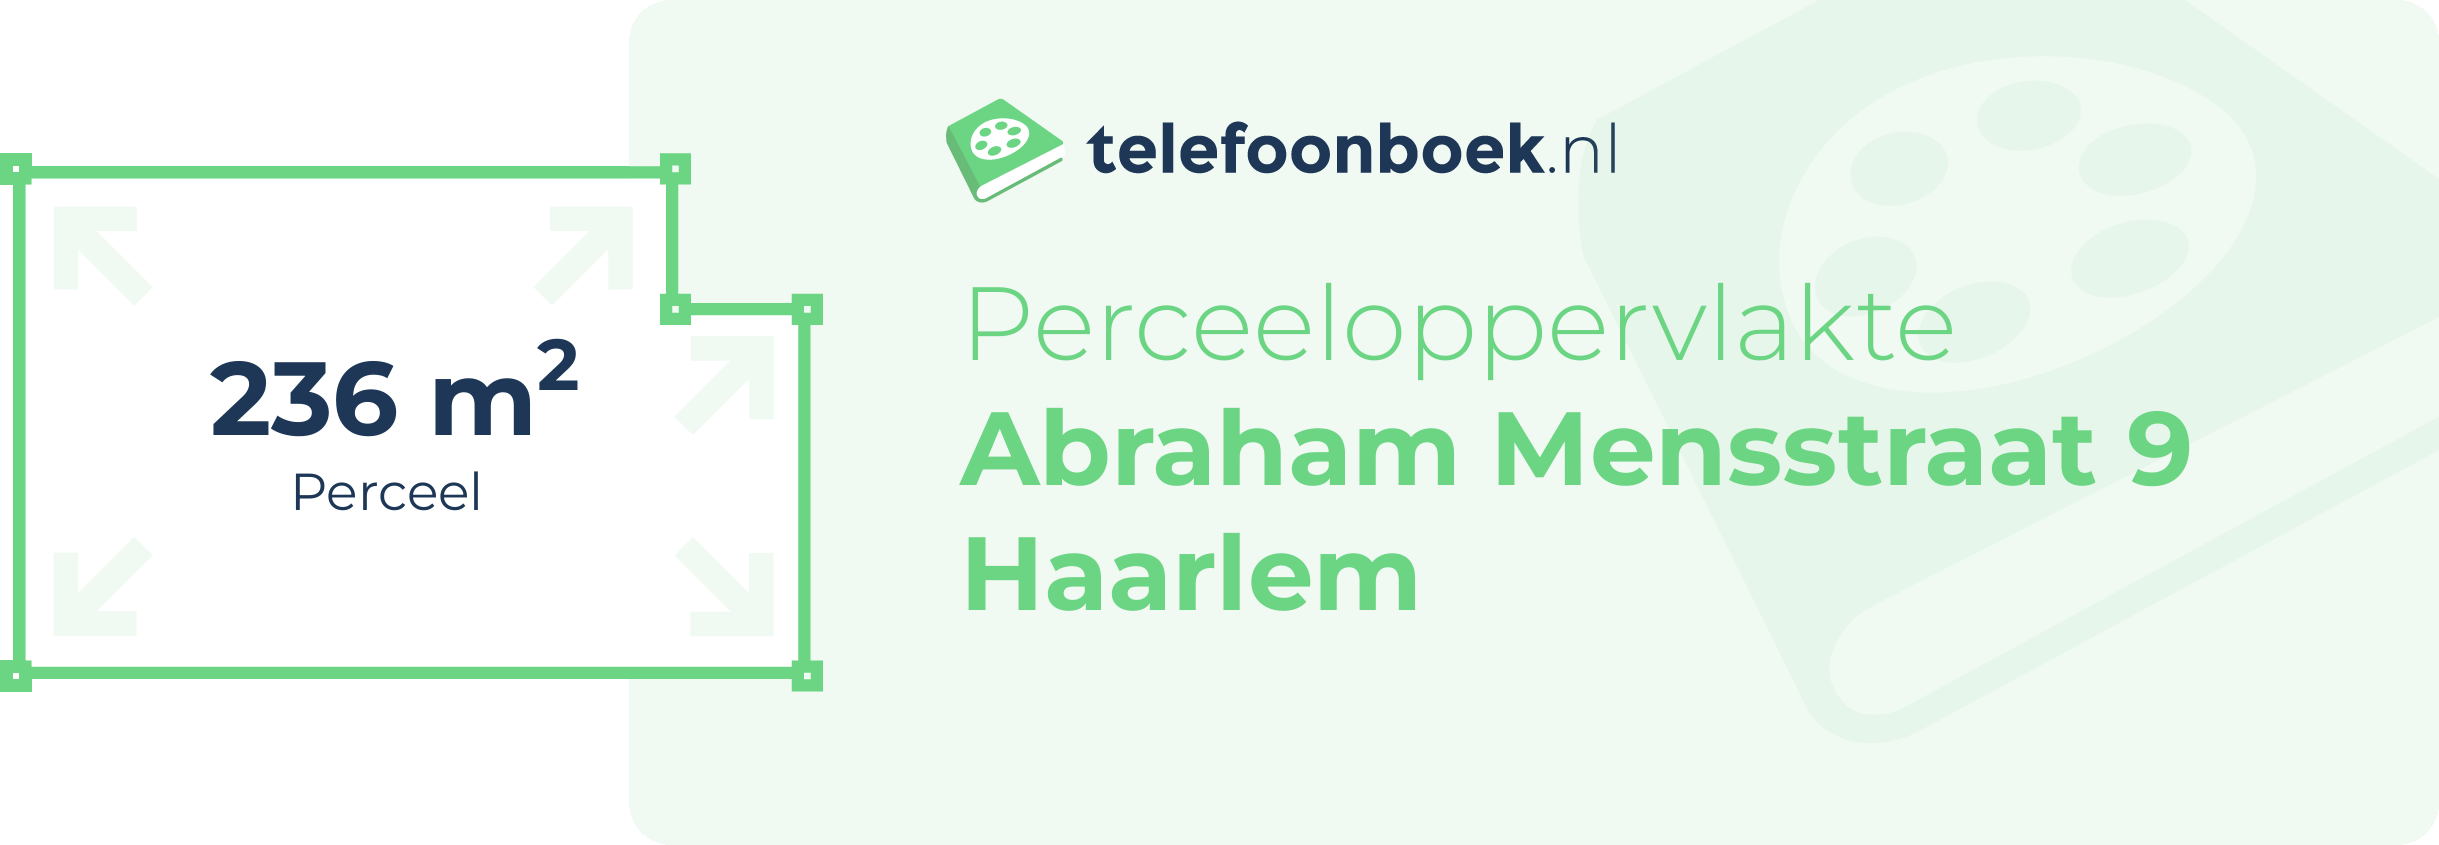 Perceeloppervlakte Abraham Mensstraat 9 Haarlem